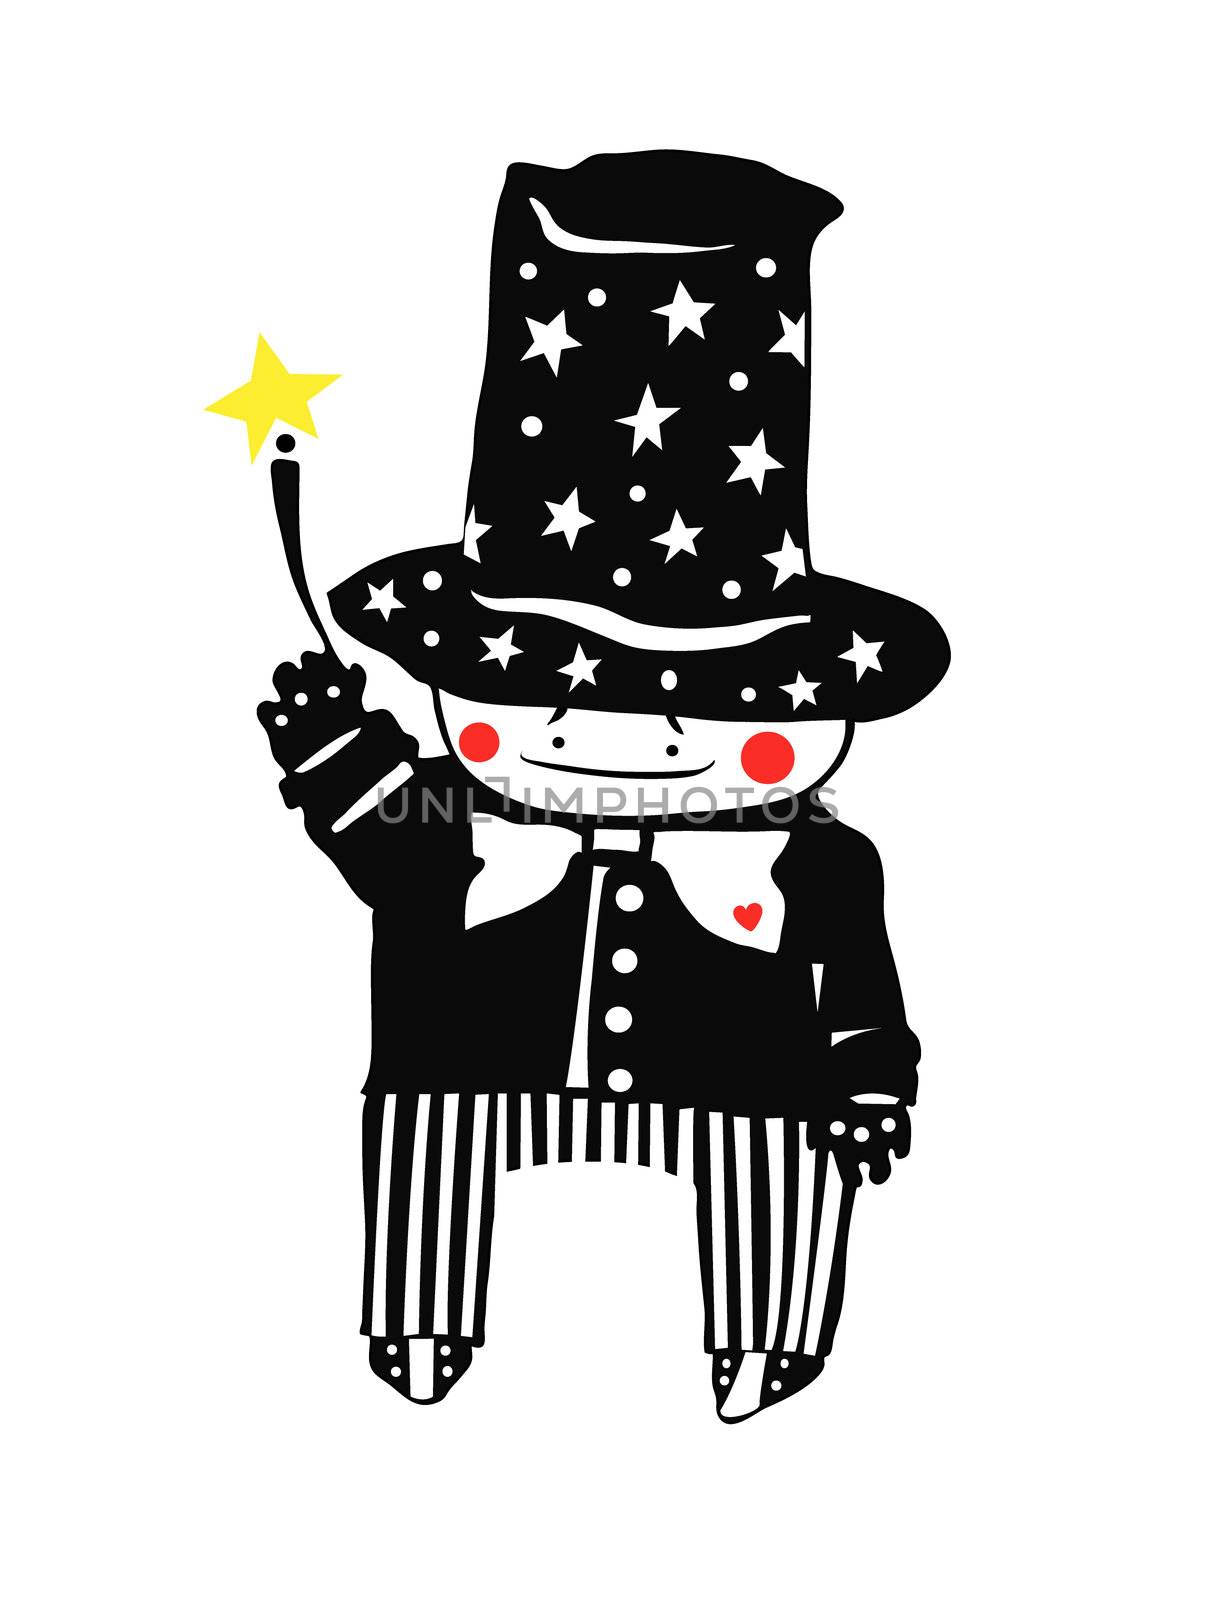 Small magician. execute of desire a magic wand.